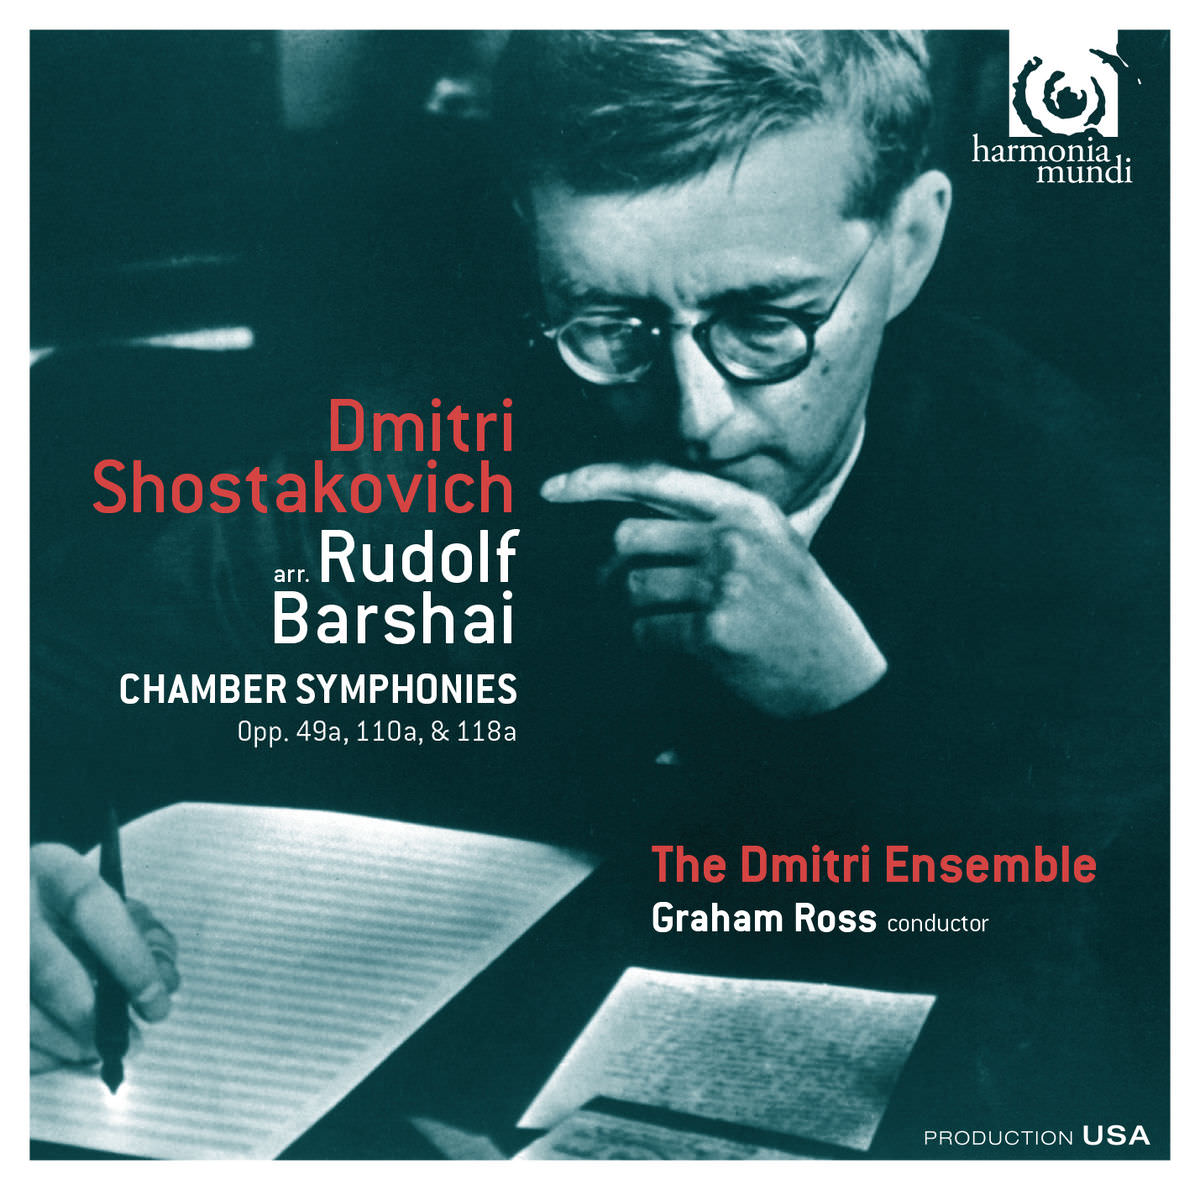 Dmitri Ensemble & Graham Ross - Shostakovich: Chamber Symphonies (Arr. by Rudolf Barshai) (2015) [FLAC 24bit/96kHz]